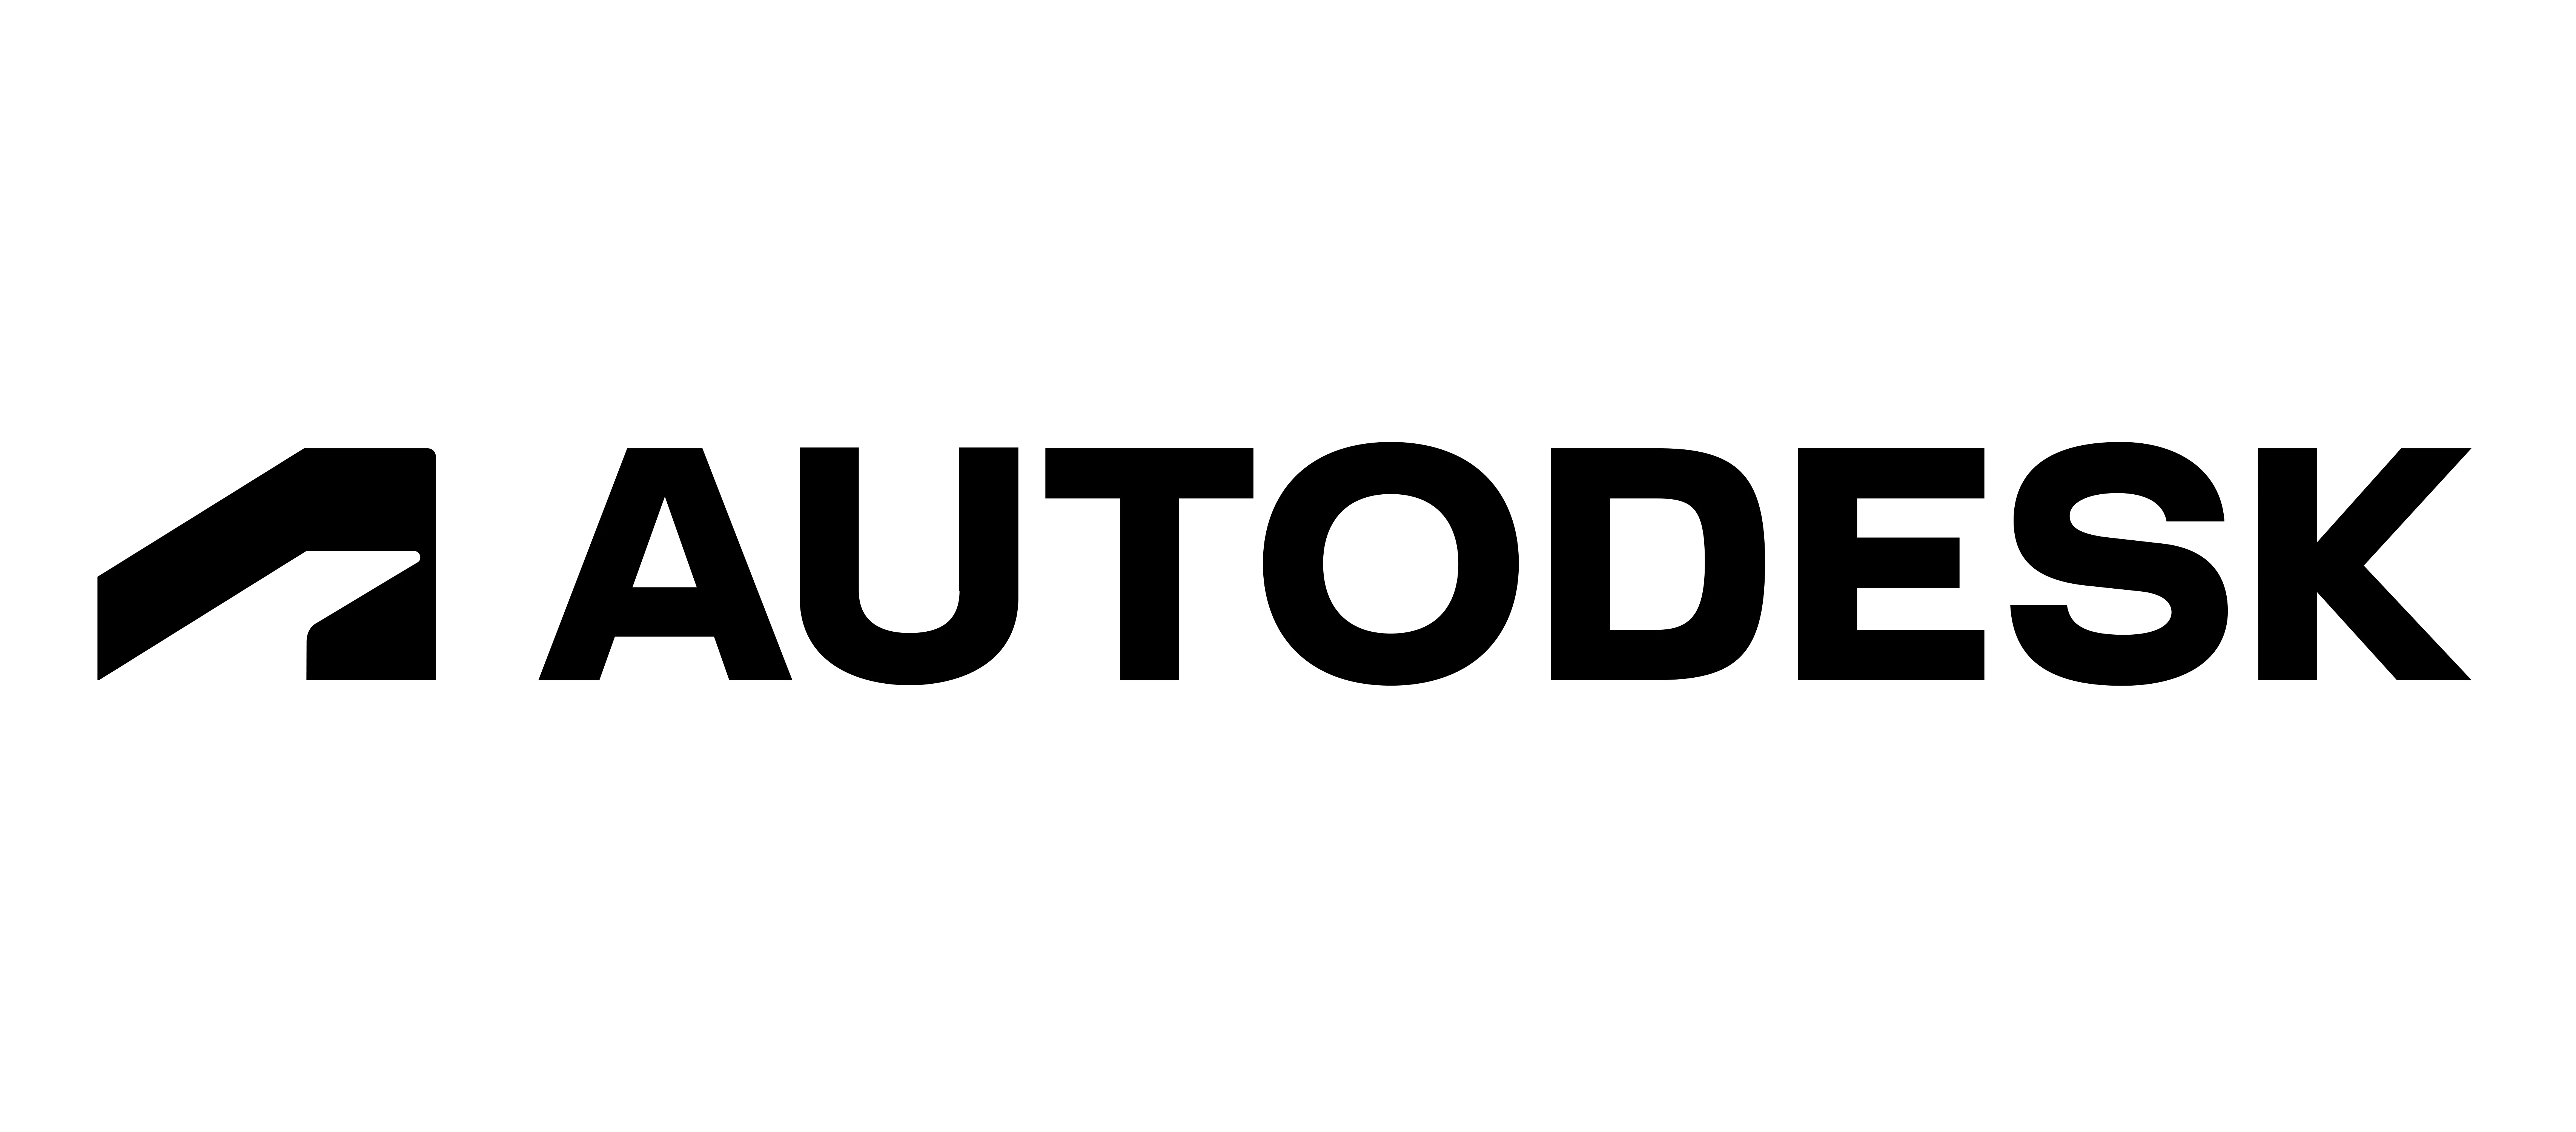 Autodesk logo 1